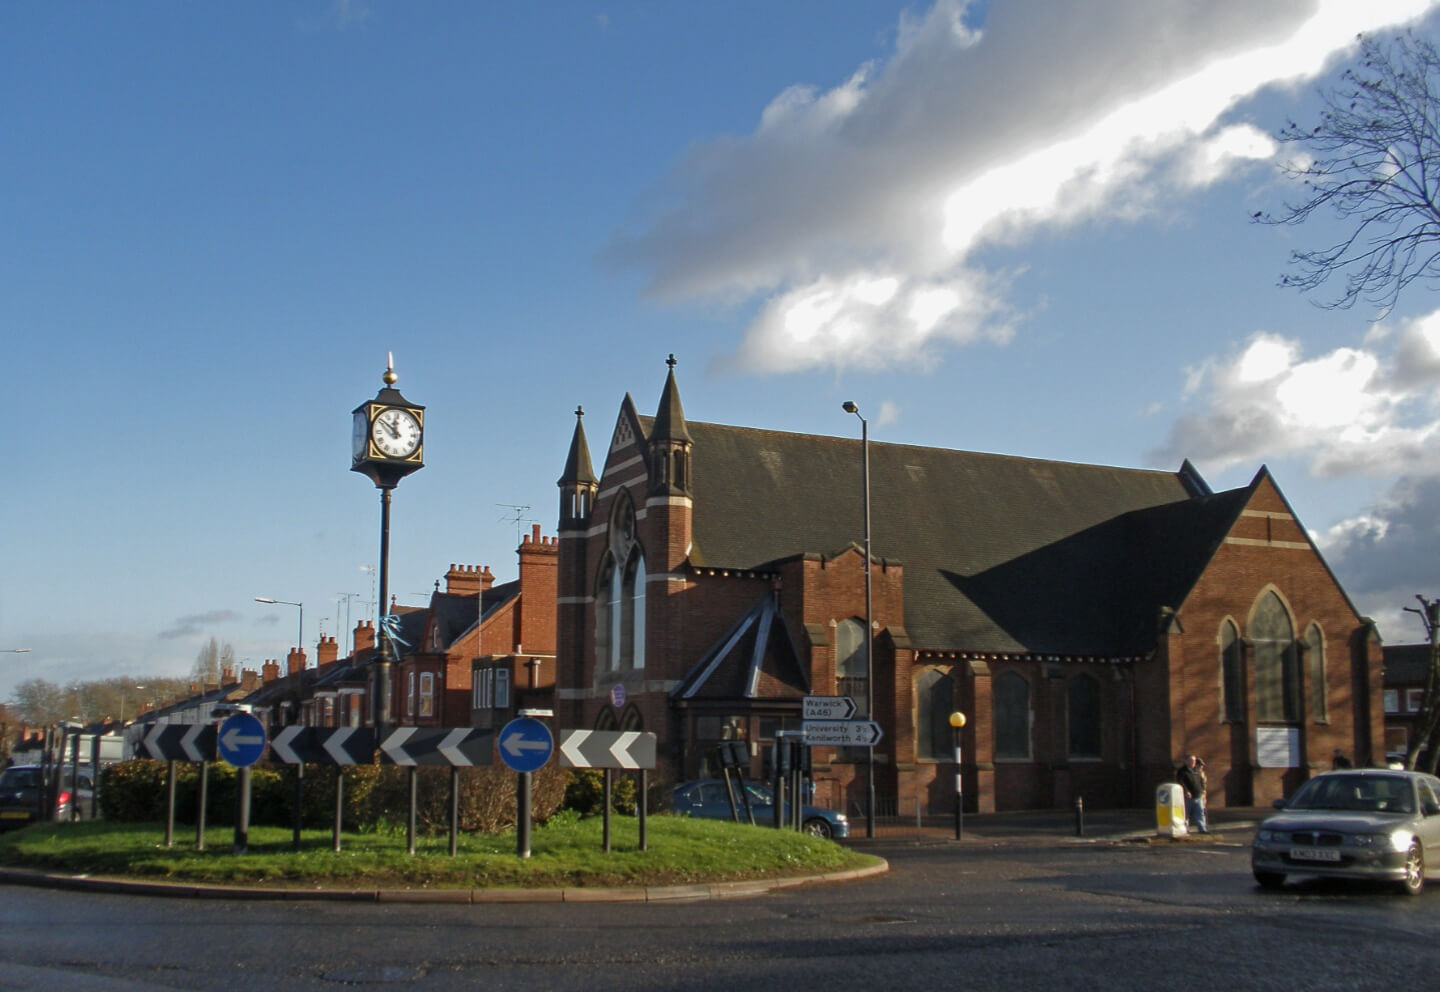 Student Accommodation in Earlsdon, Coventry - Earlsdon Methodist Church